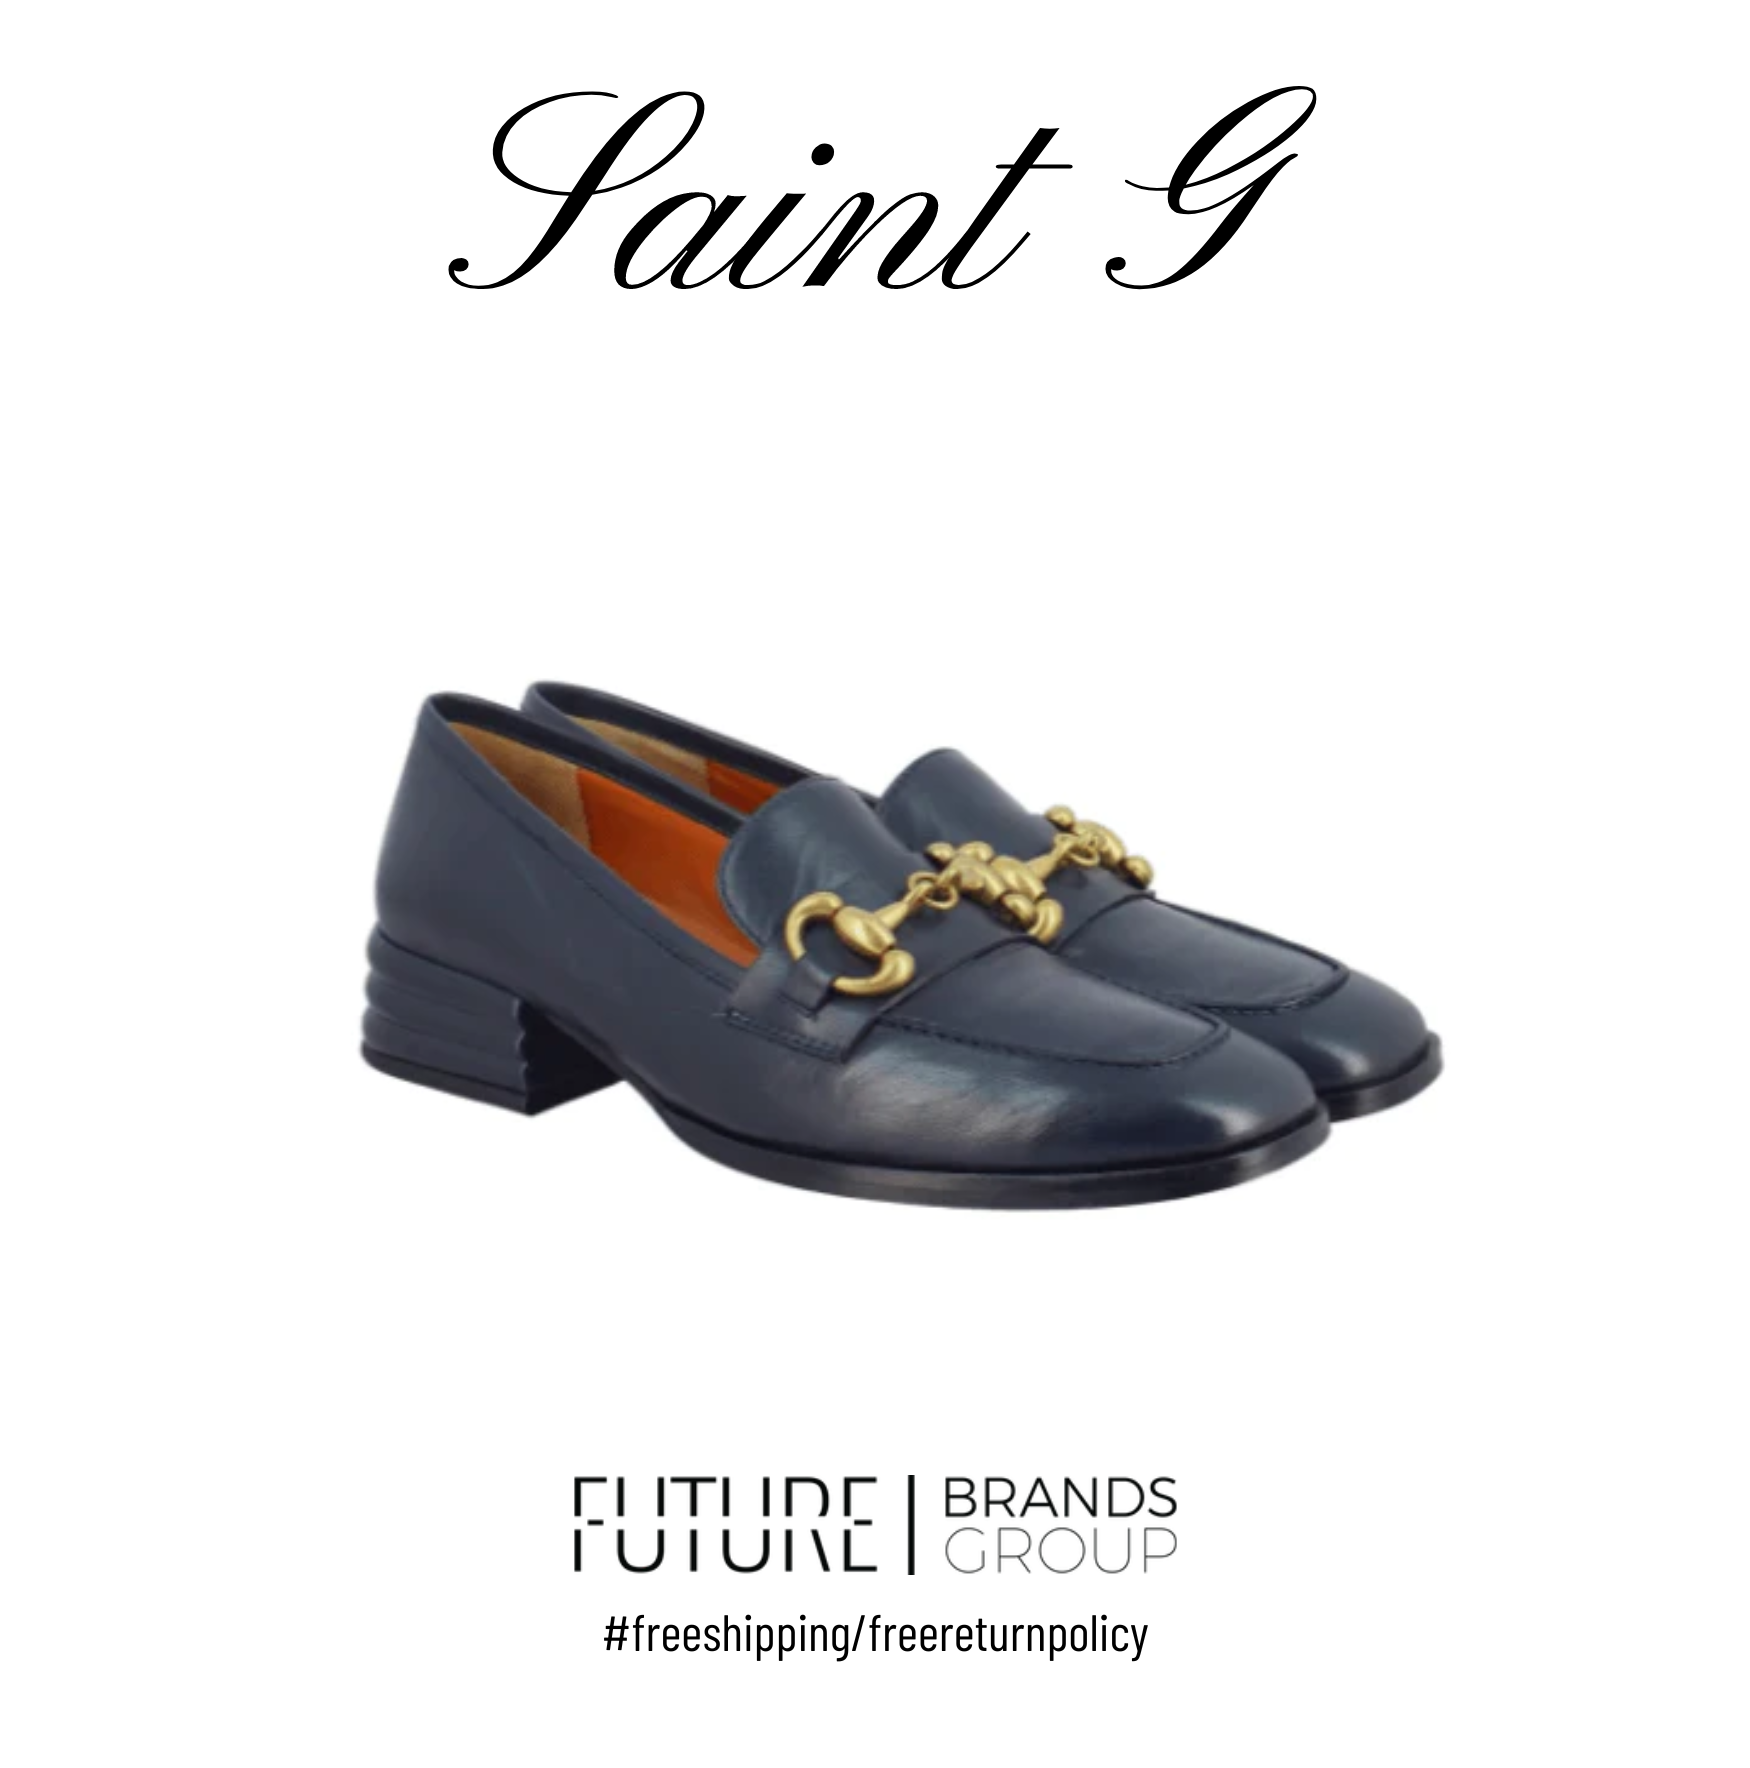 Jenny Navy Leather Loafer | Saint G | Future Brands Group